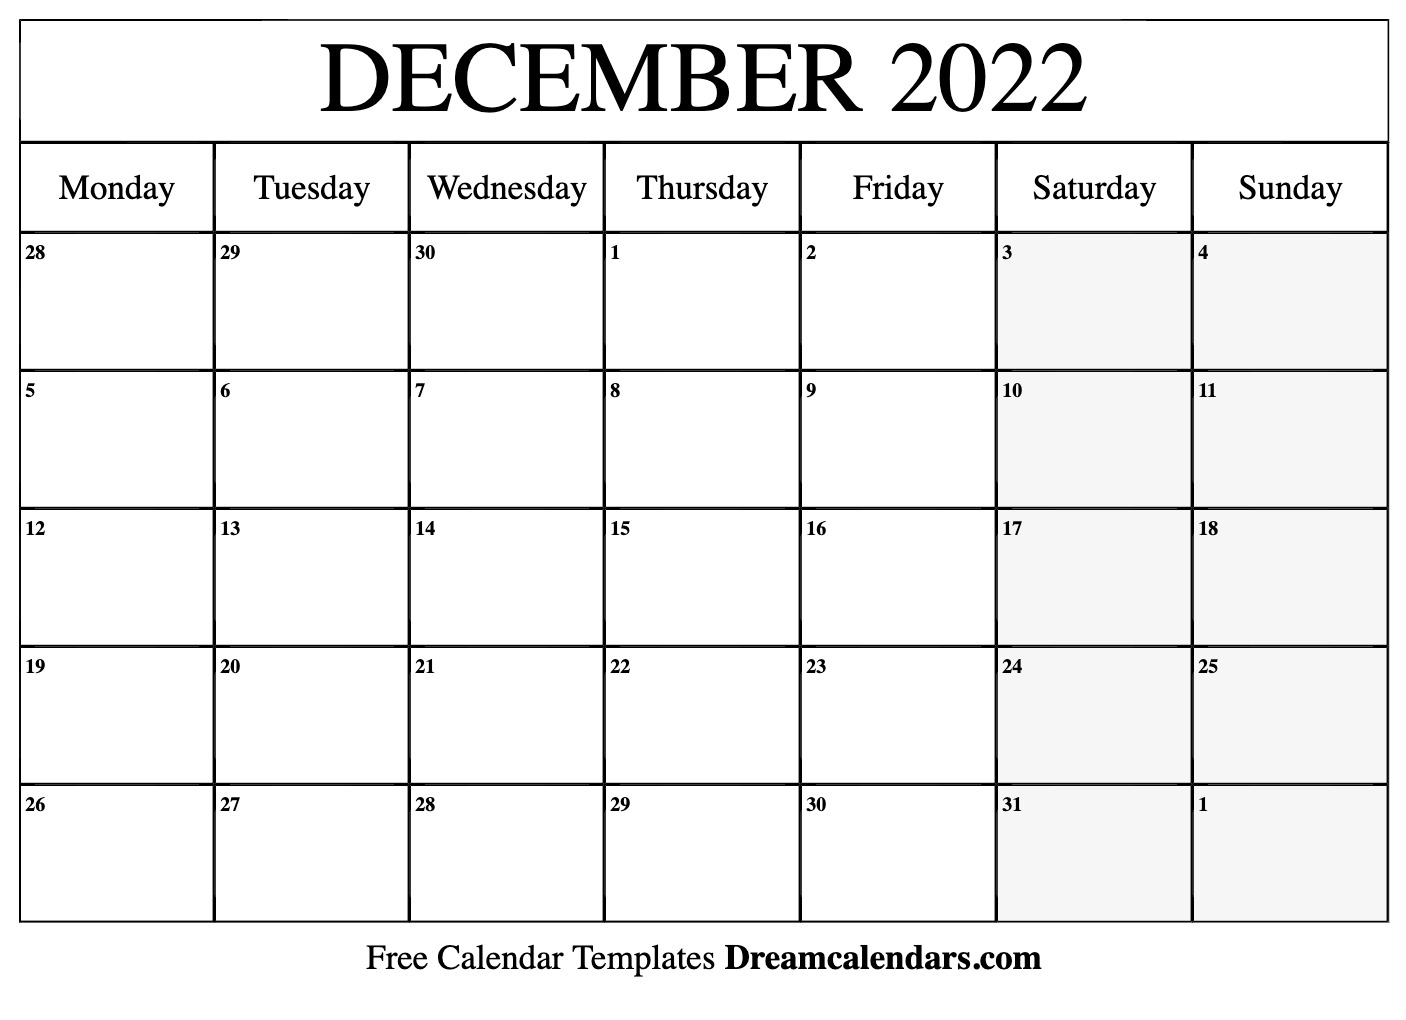 December Calendar Printable 2022 Download Printable December 2022 Calendars